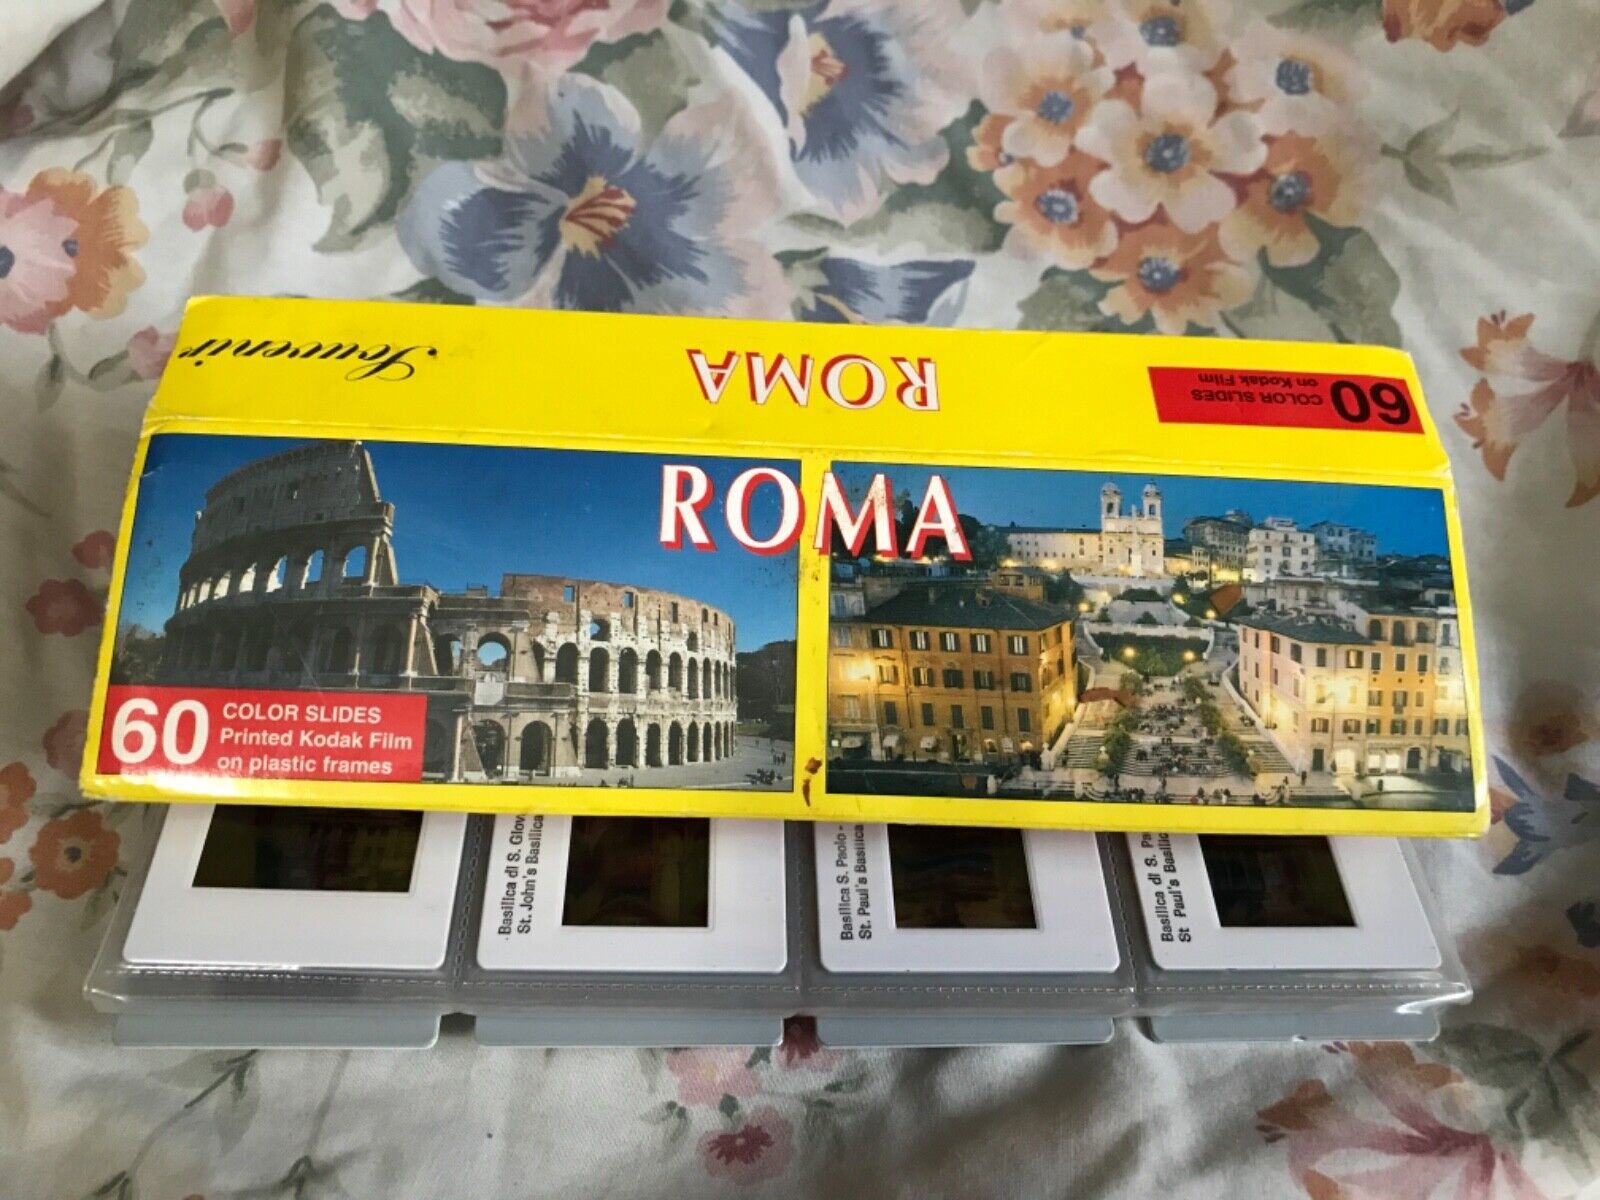 Roma Rome Italy 60 Color Slides Printed On Kodak Film On Plastic Frames